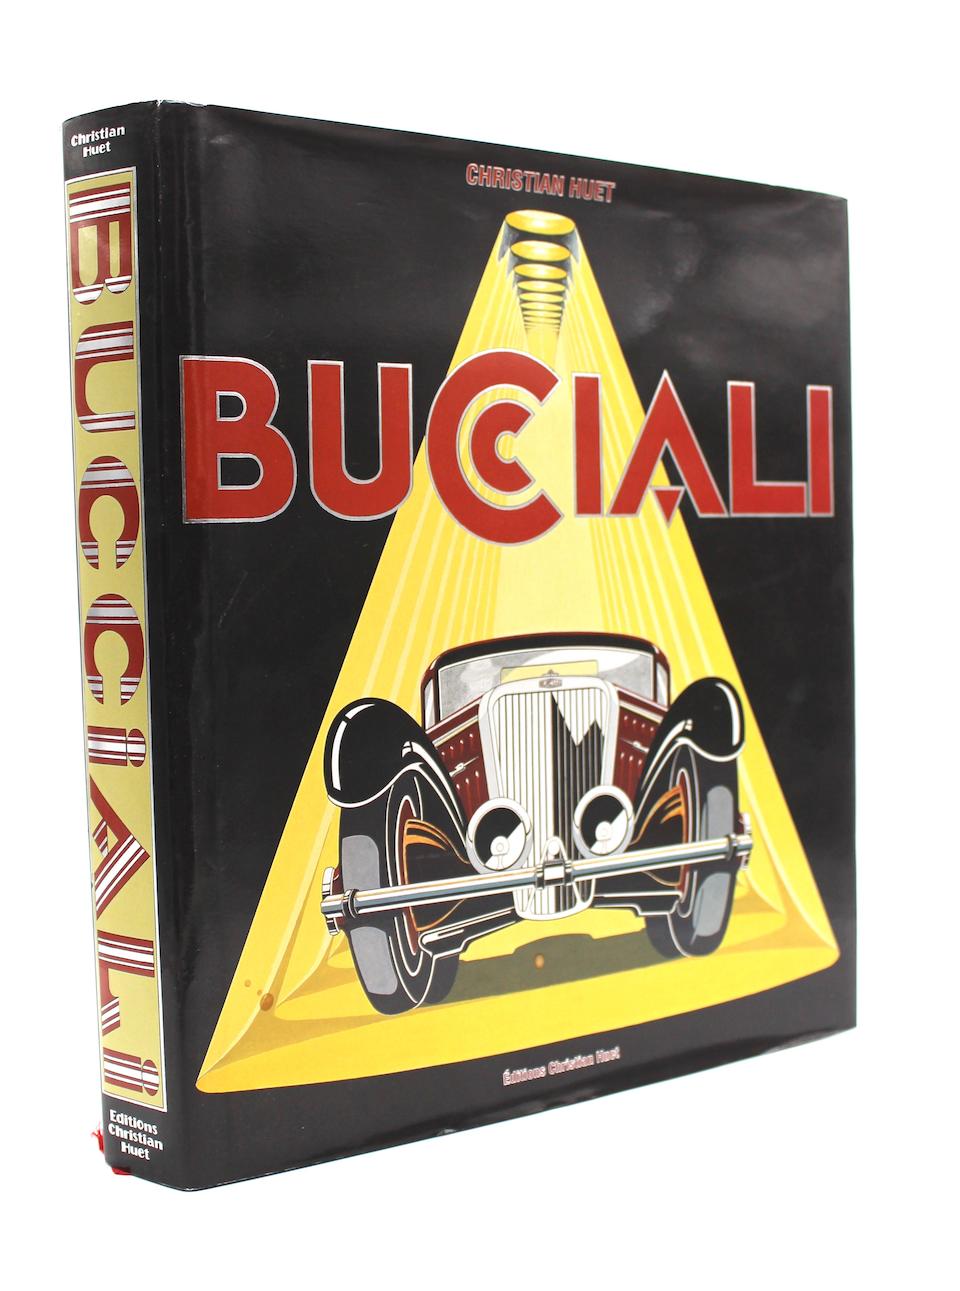 'BUCCIALI' Christian Huet - Image 4 of 4